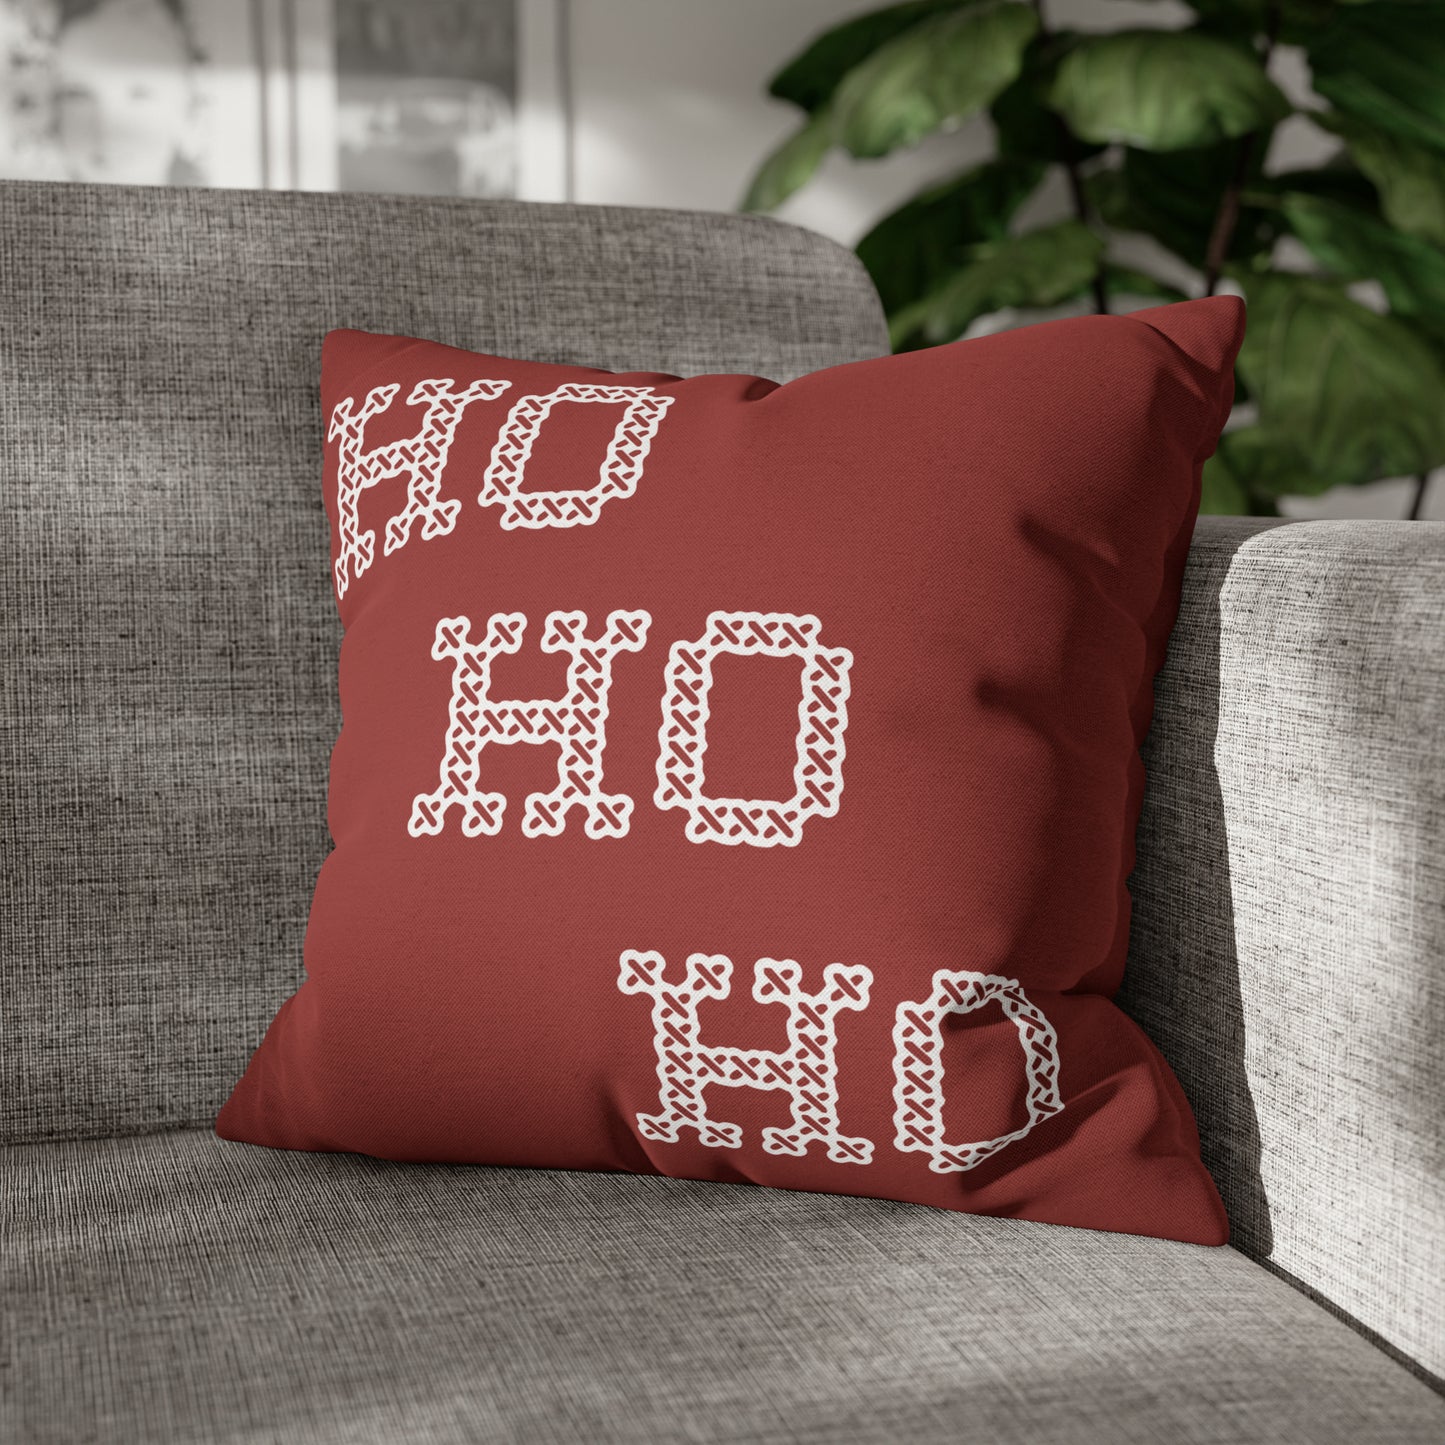 "Ho Ho Ho" Christmas Pillow Cover, Red